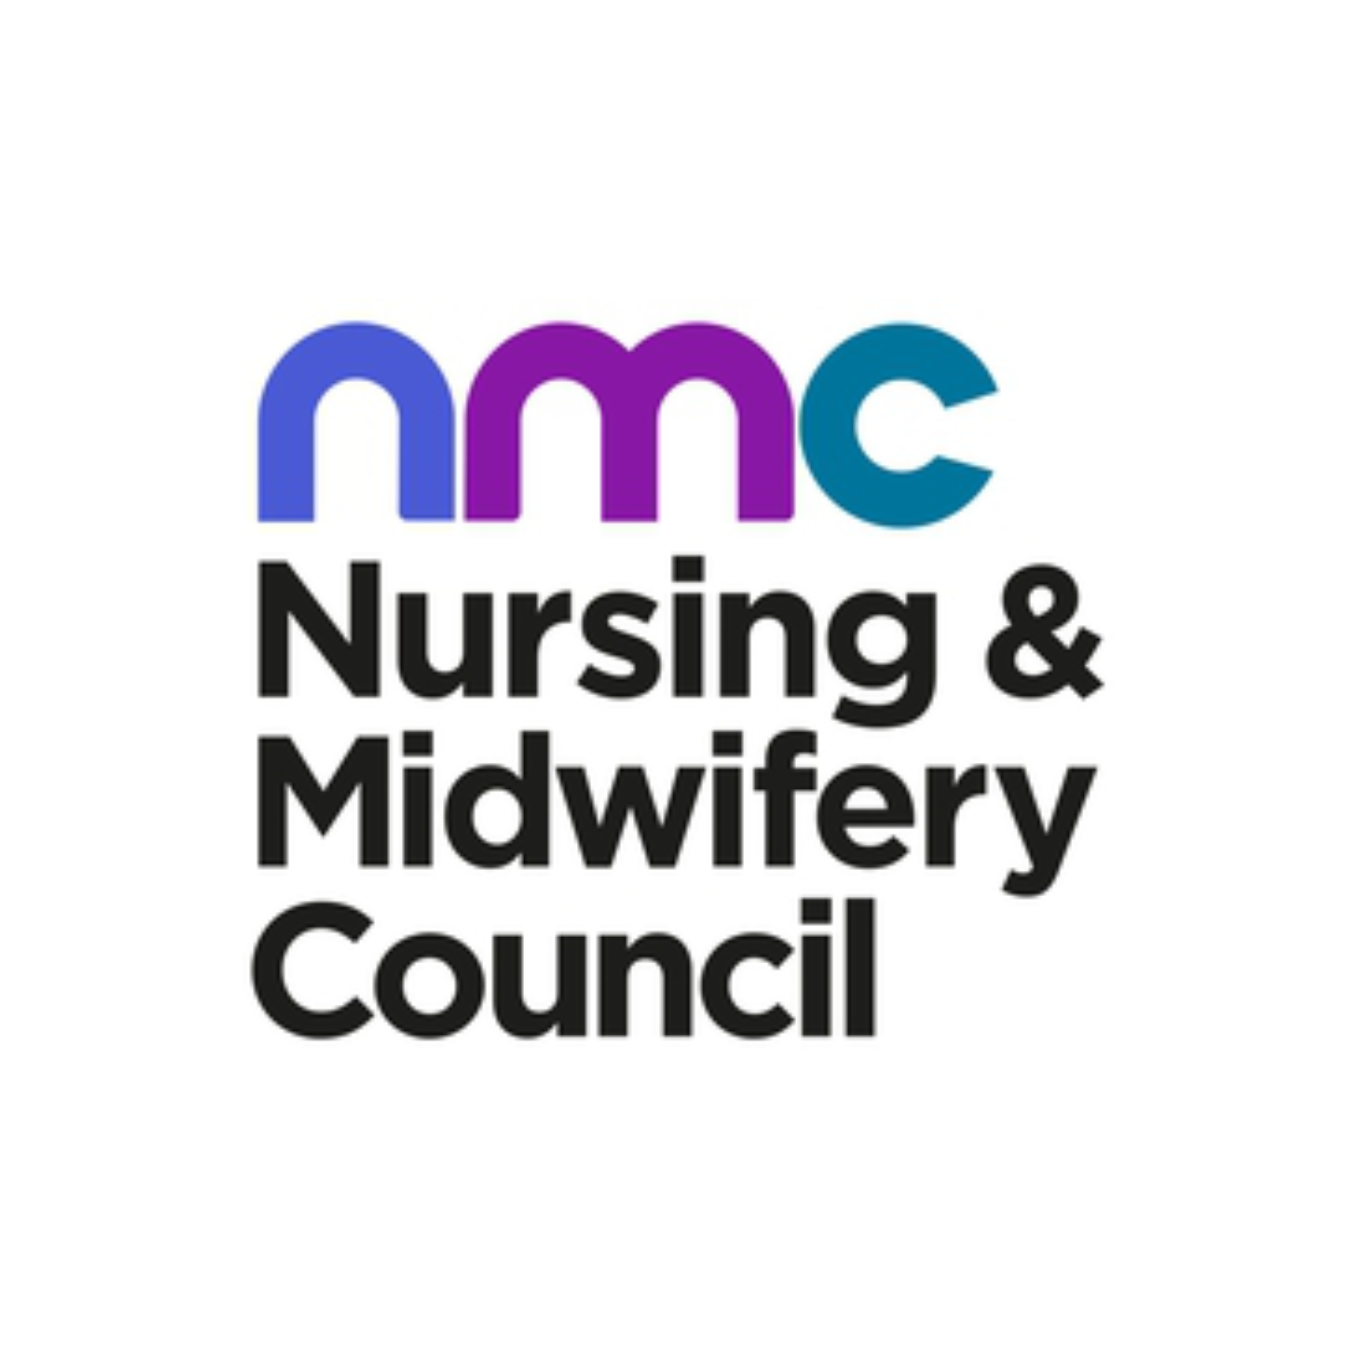 The nursing and midwifery council logo